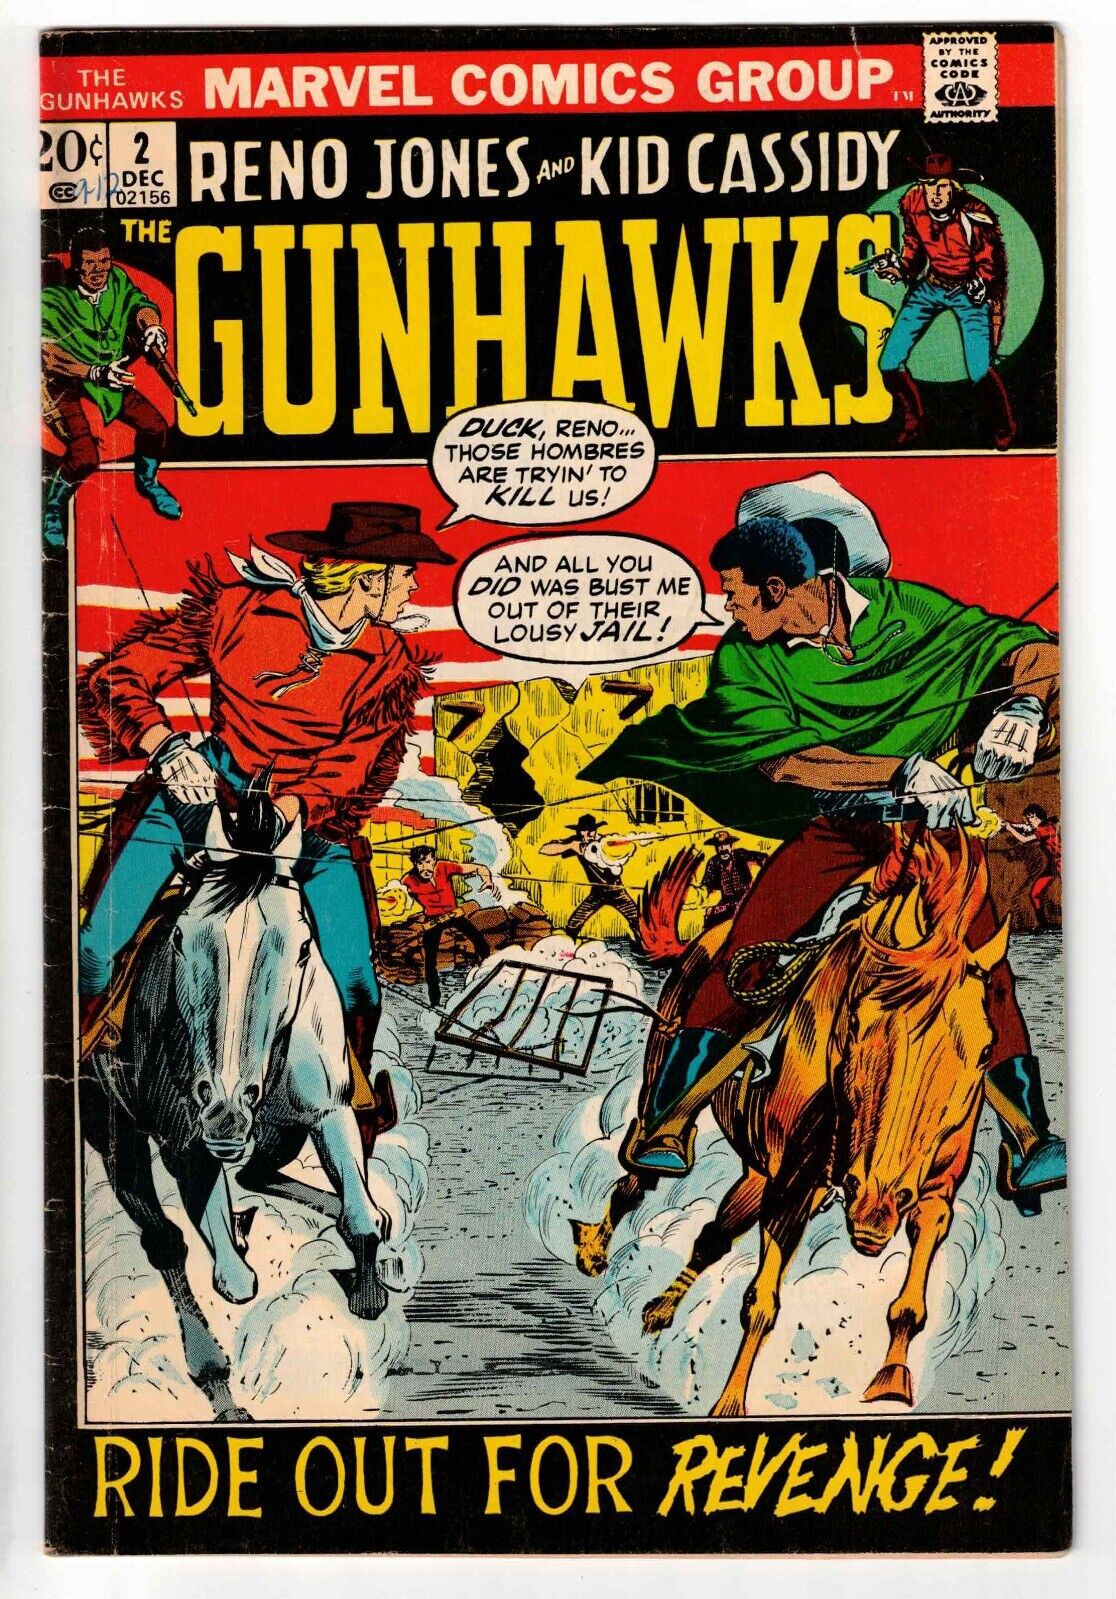 RENO JONES AND KID CASSIDY THE GUNHAWKS #2 1972 MARVEL BRONZE AGE